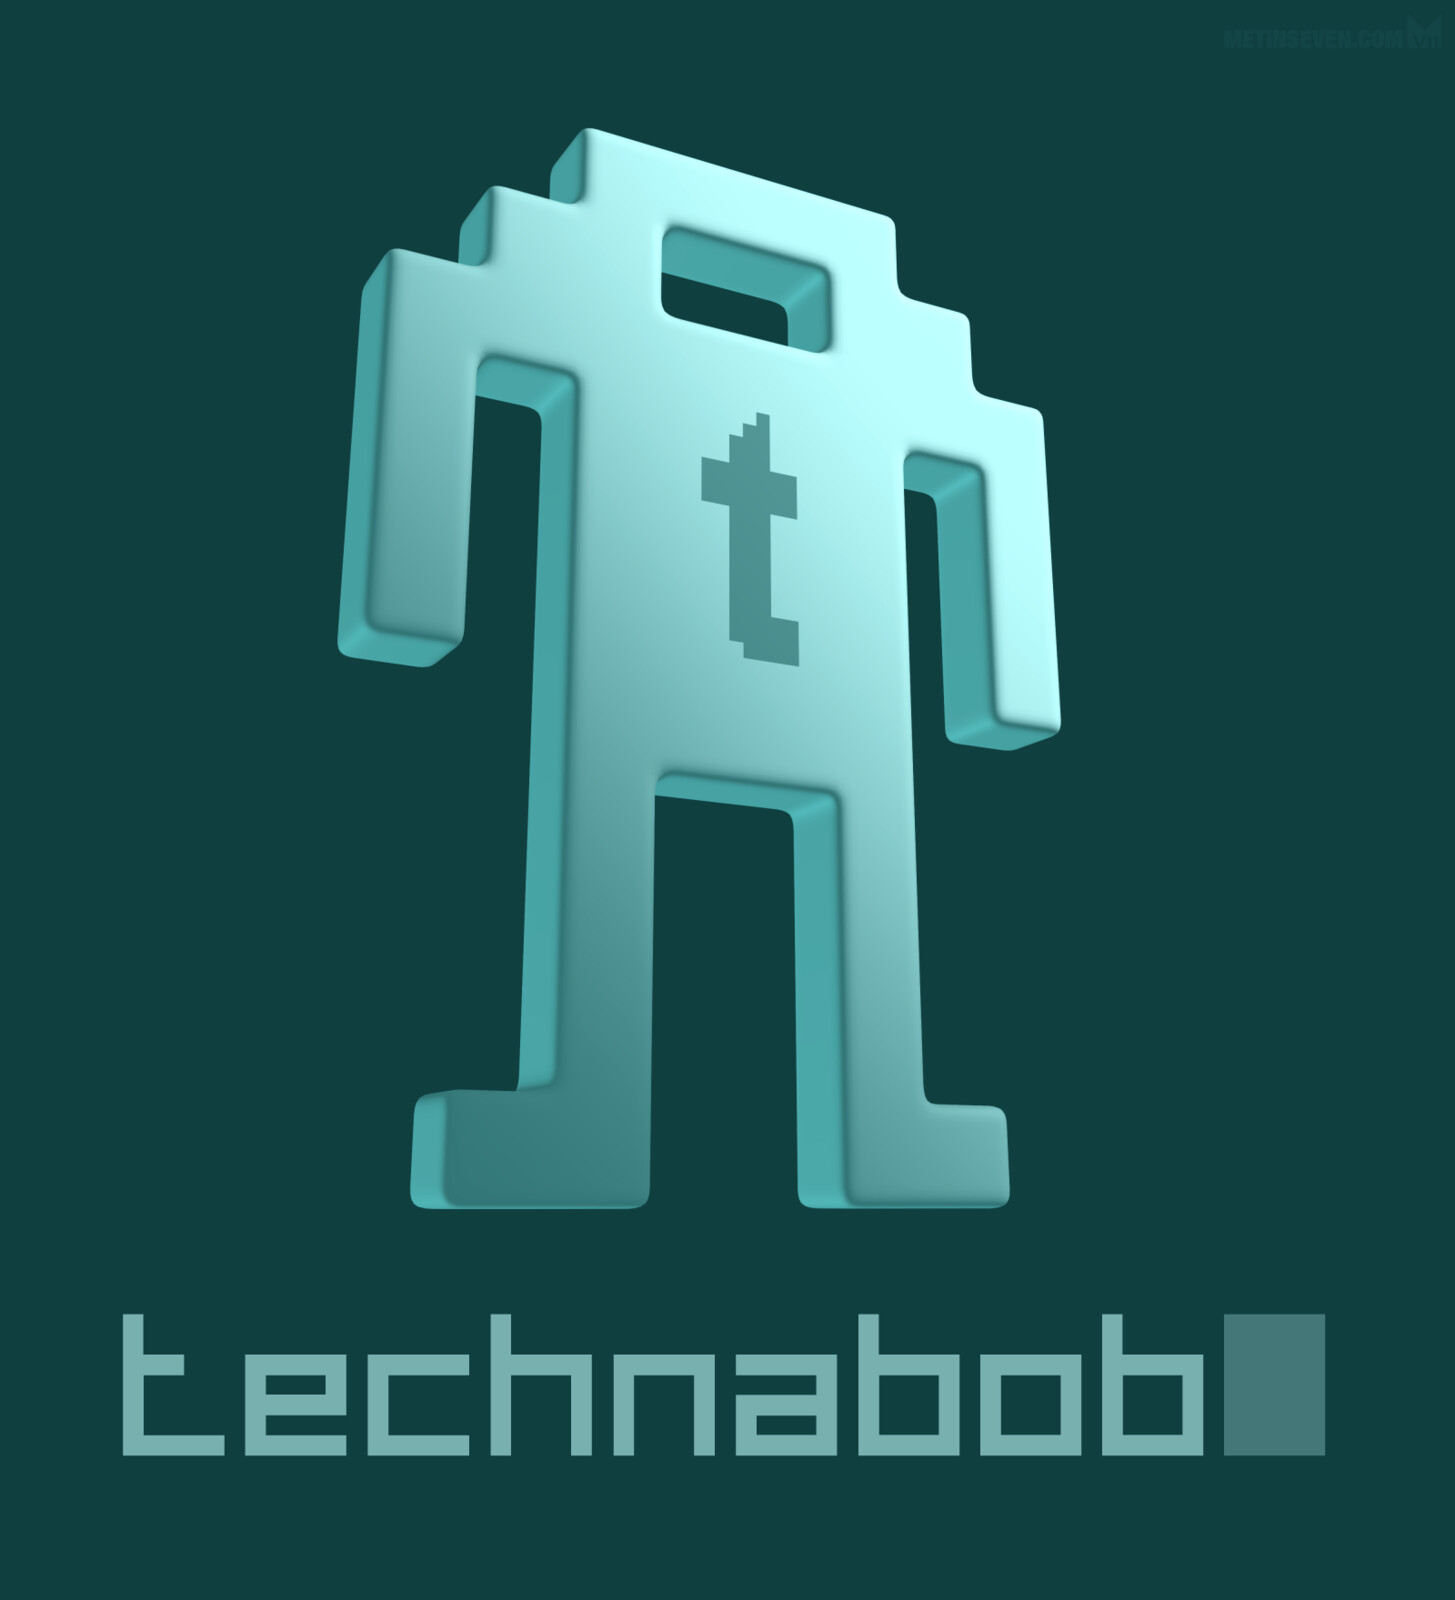 3D pixel style logo design for the Technabob blog